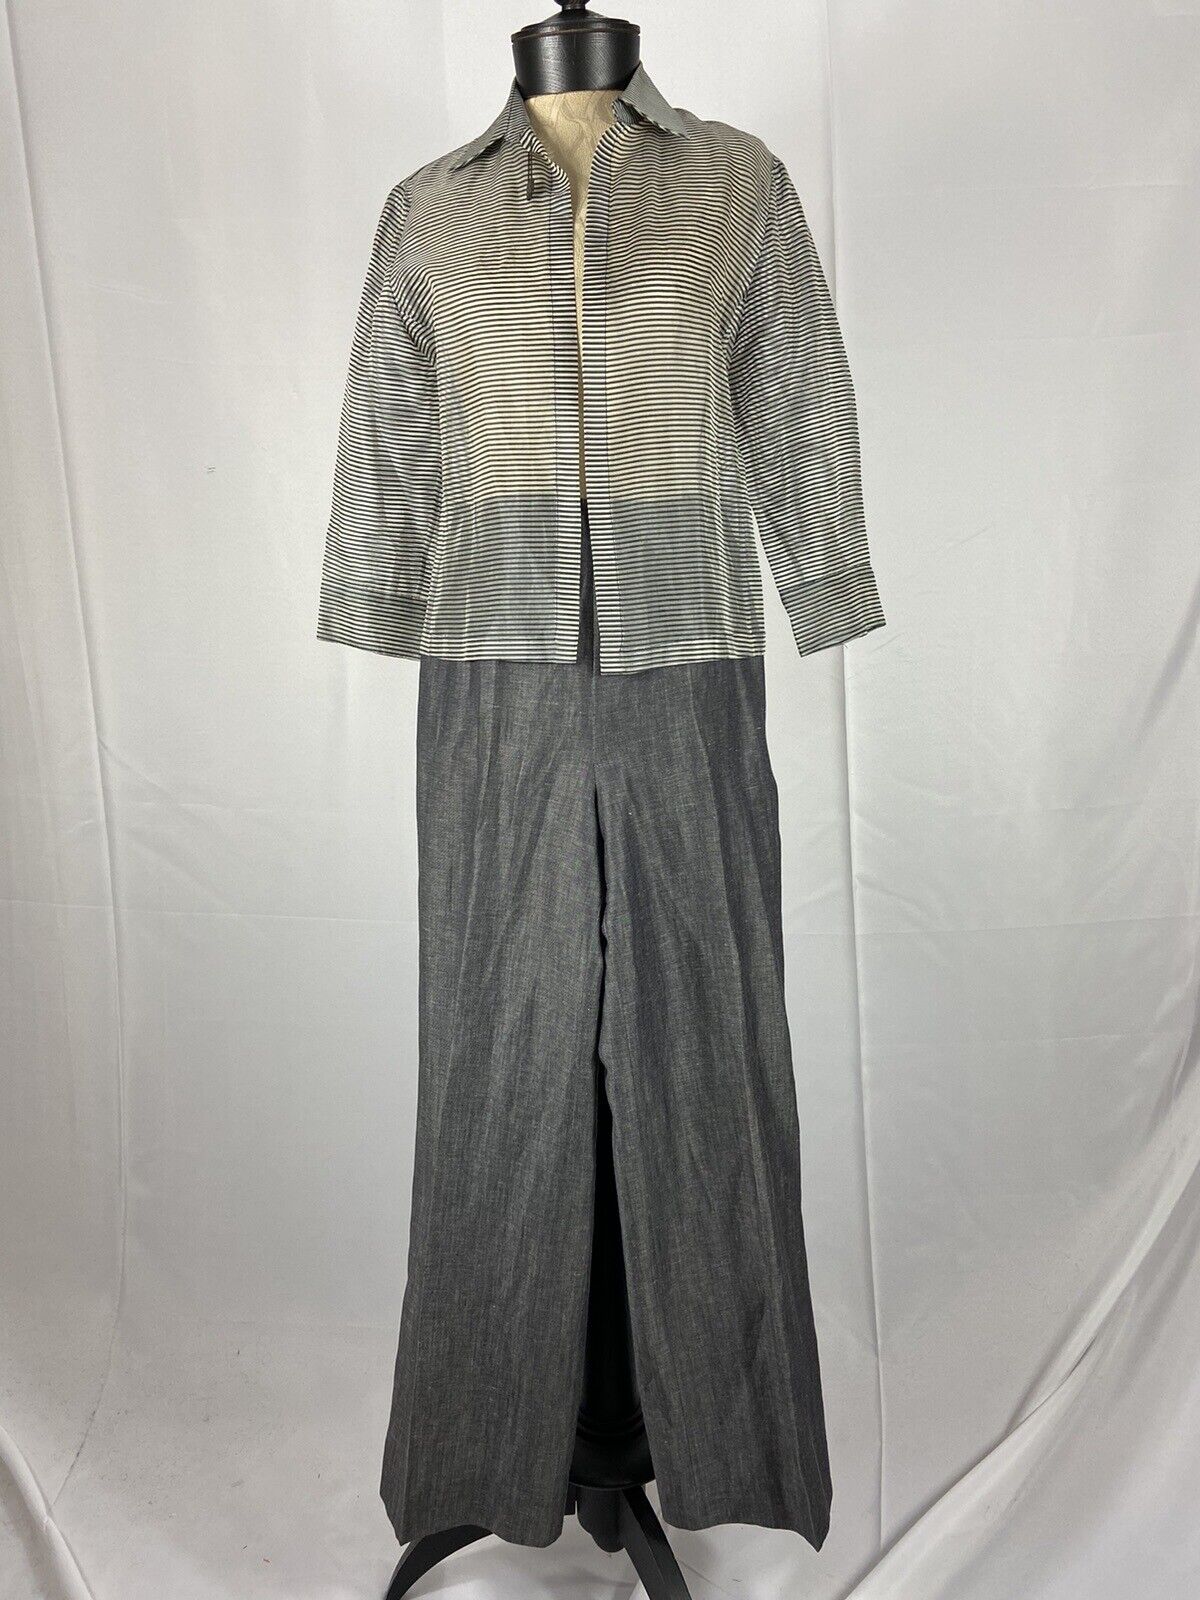 AKRIS Size 6 Metallic Gray Silk Striped Jacket an… - image 1